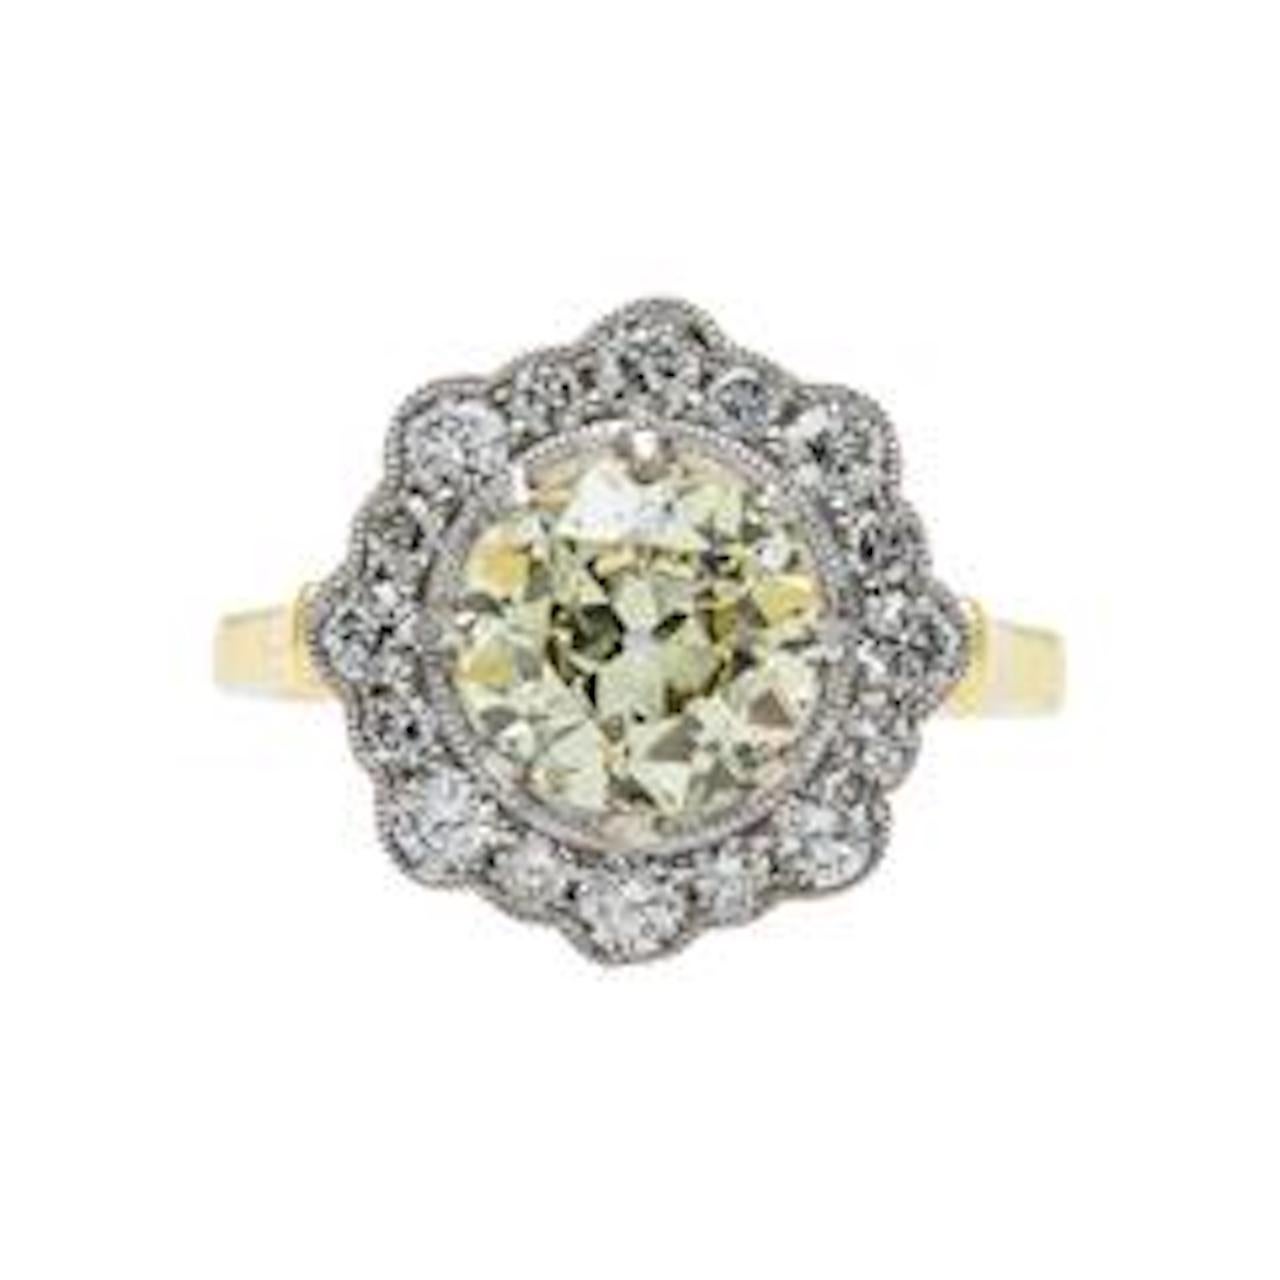 Edwardian Inspired 1.85 Carat Diamond Halo Engagement Ring